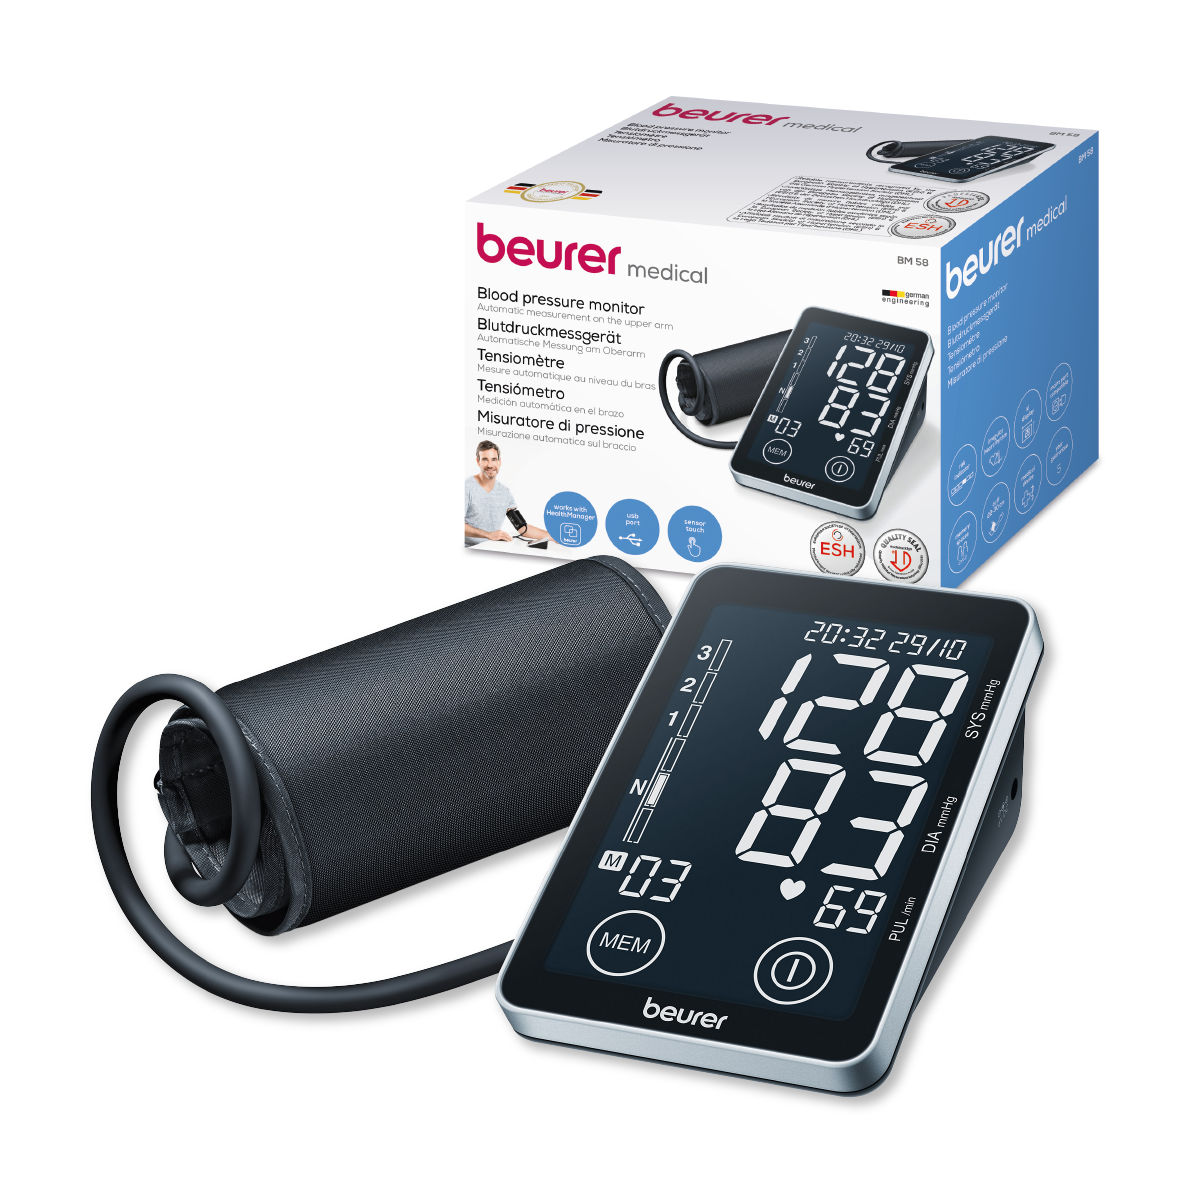 Monitor de presión arterial baumanómetro digital de brazo con pantalla táctil y conexión USB BM58 - Marca Beurer